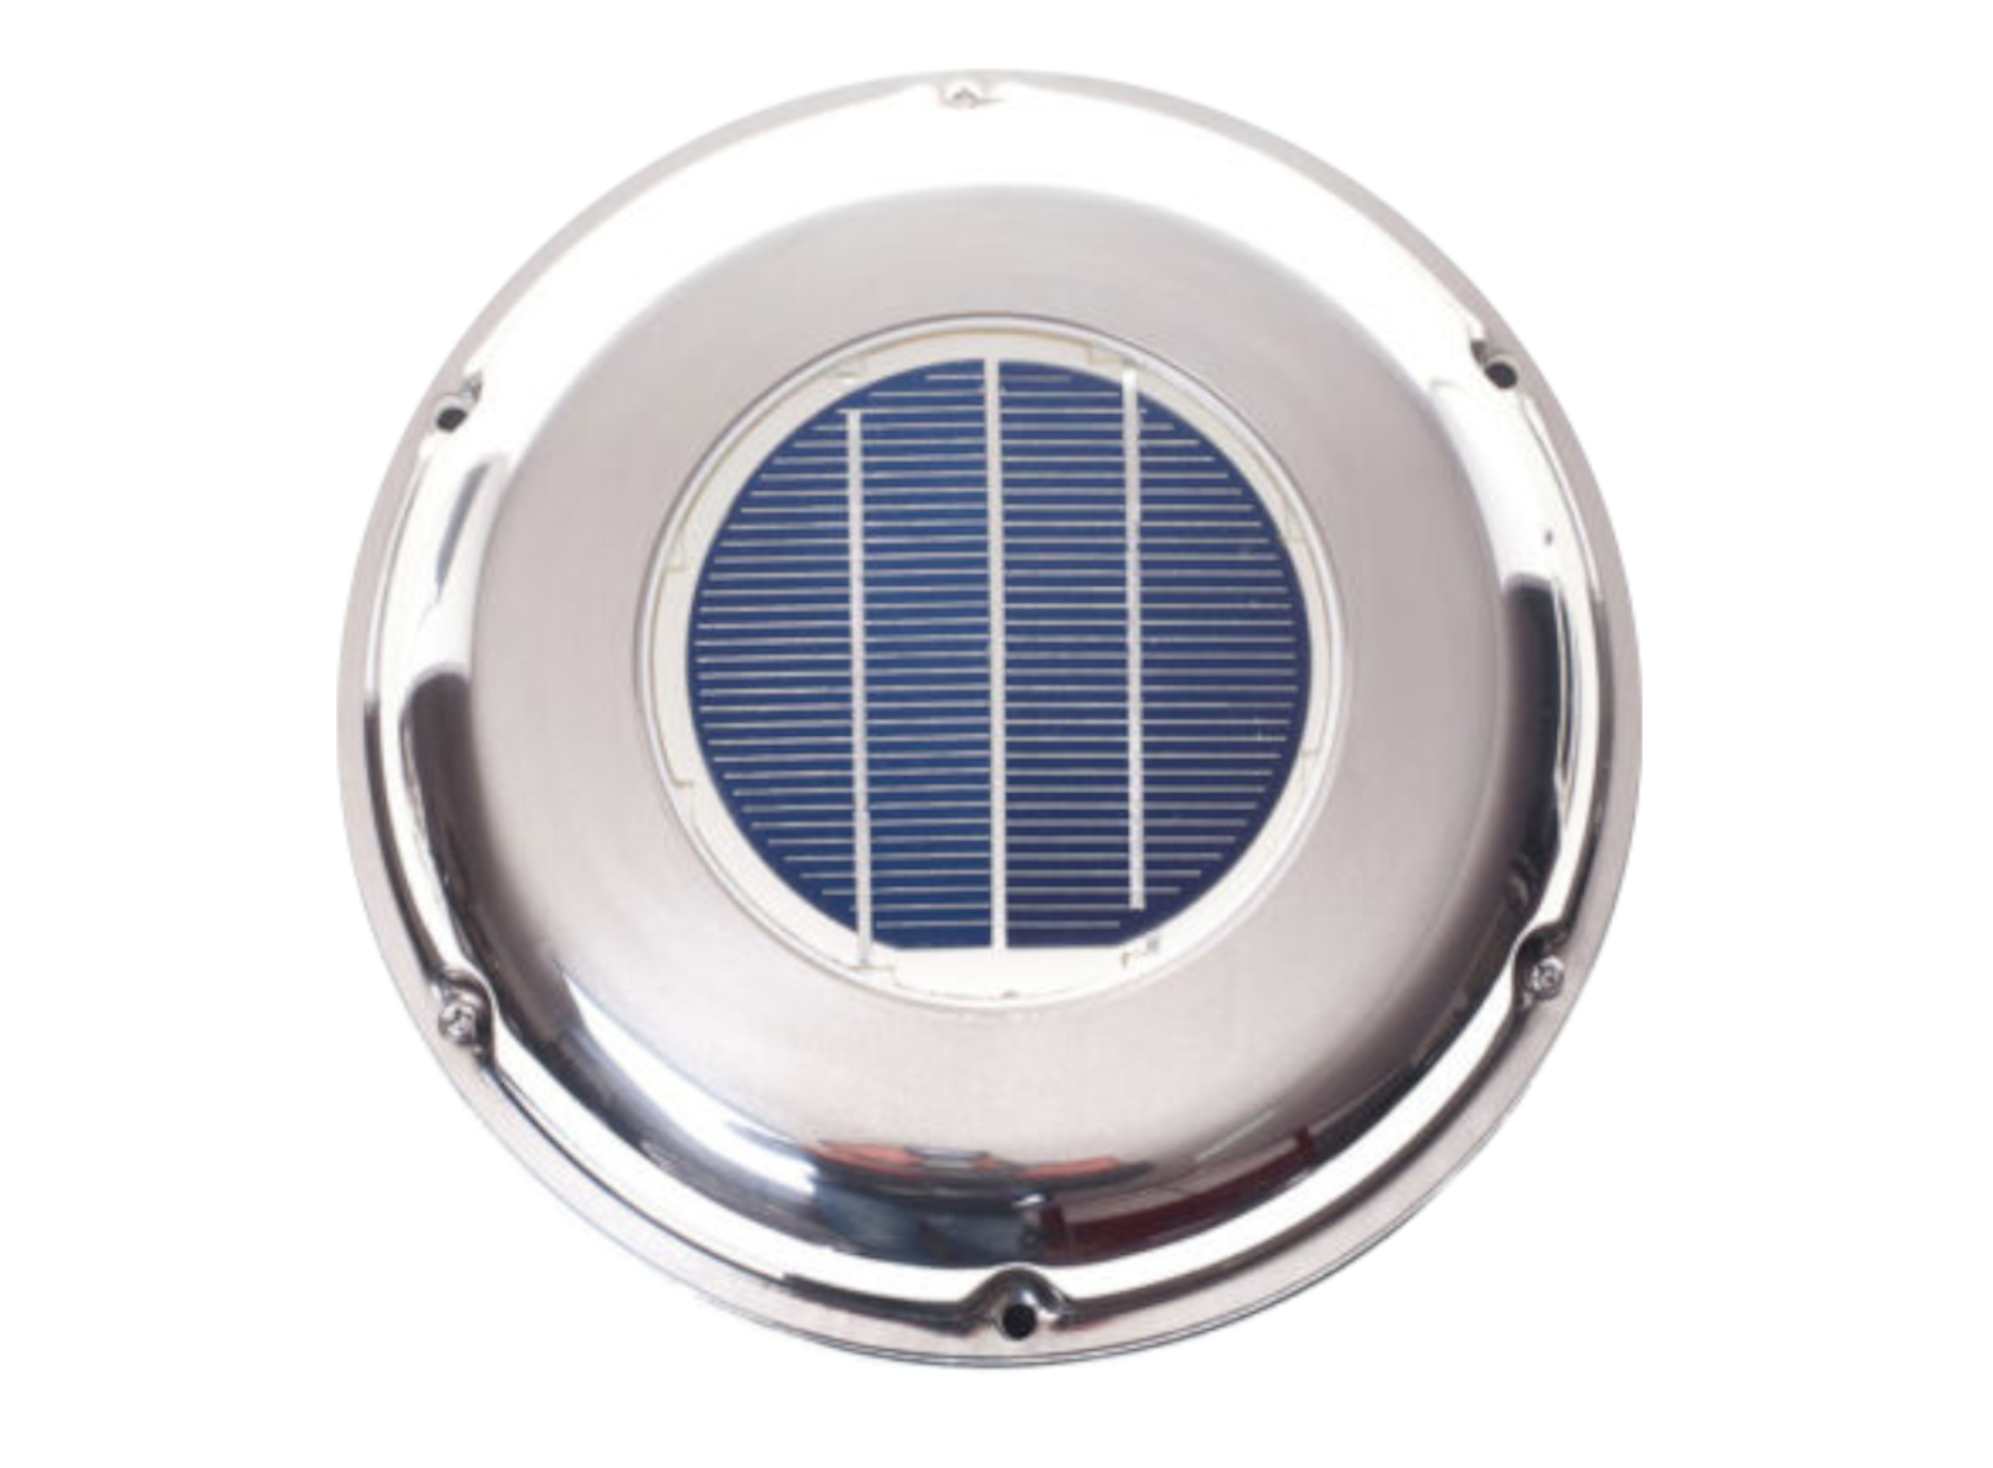 Edelstahl Solar Solarlüfter Belüfter Ventilator für Boot Wohnmobil Gartenhaus